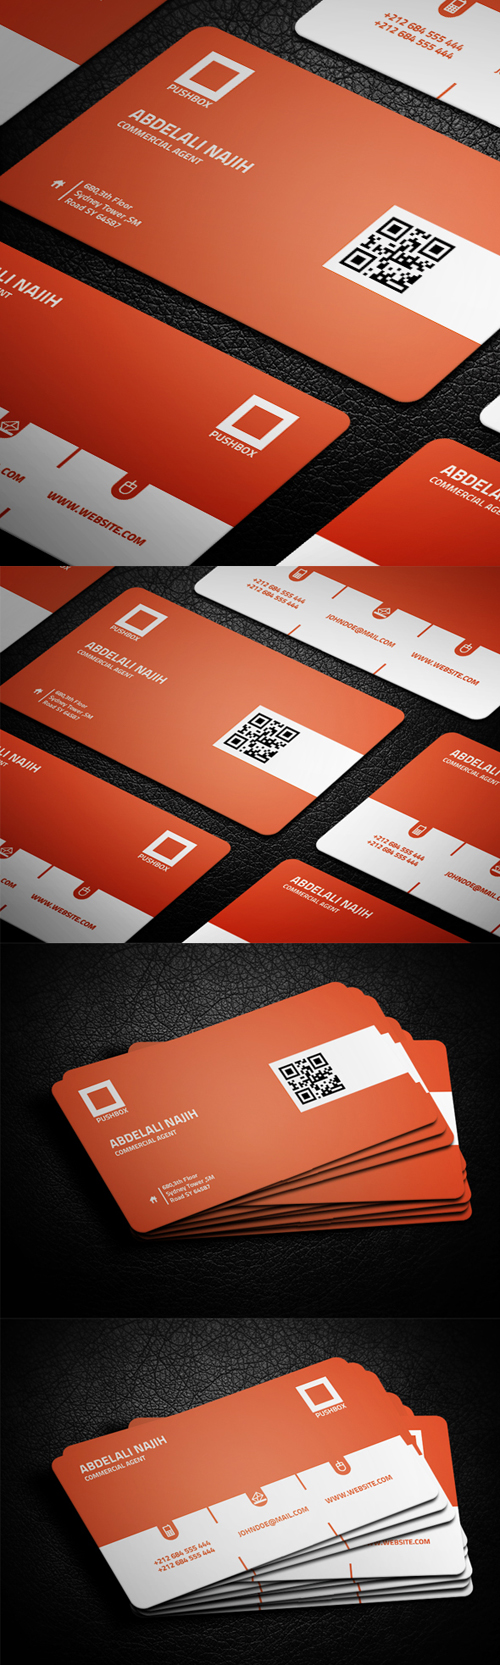 business cards template design - 10